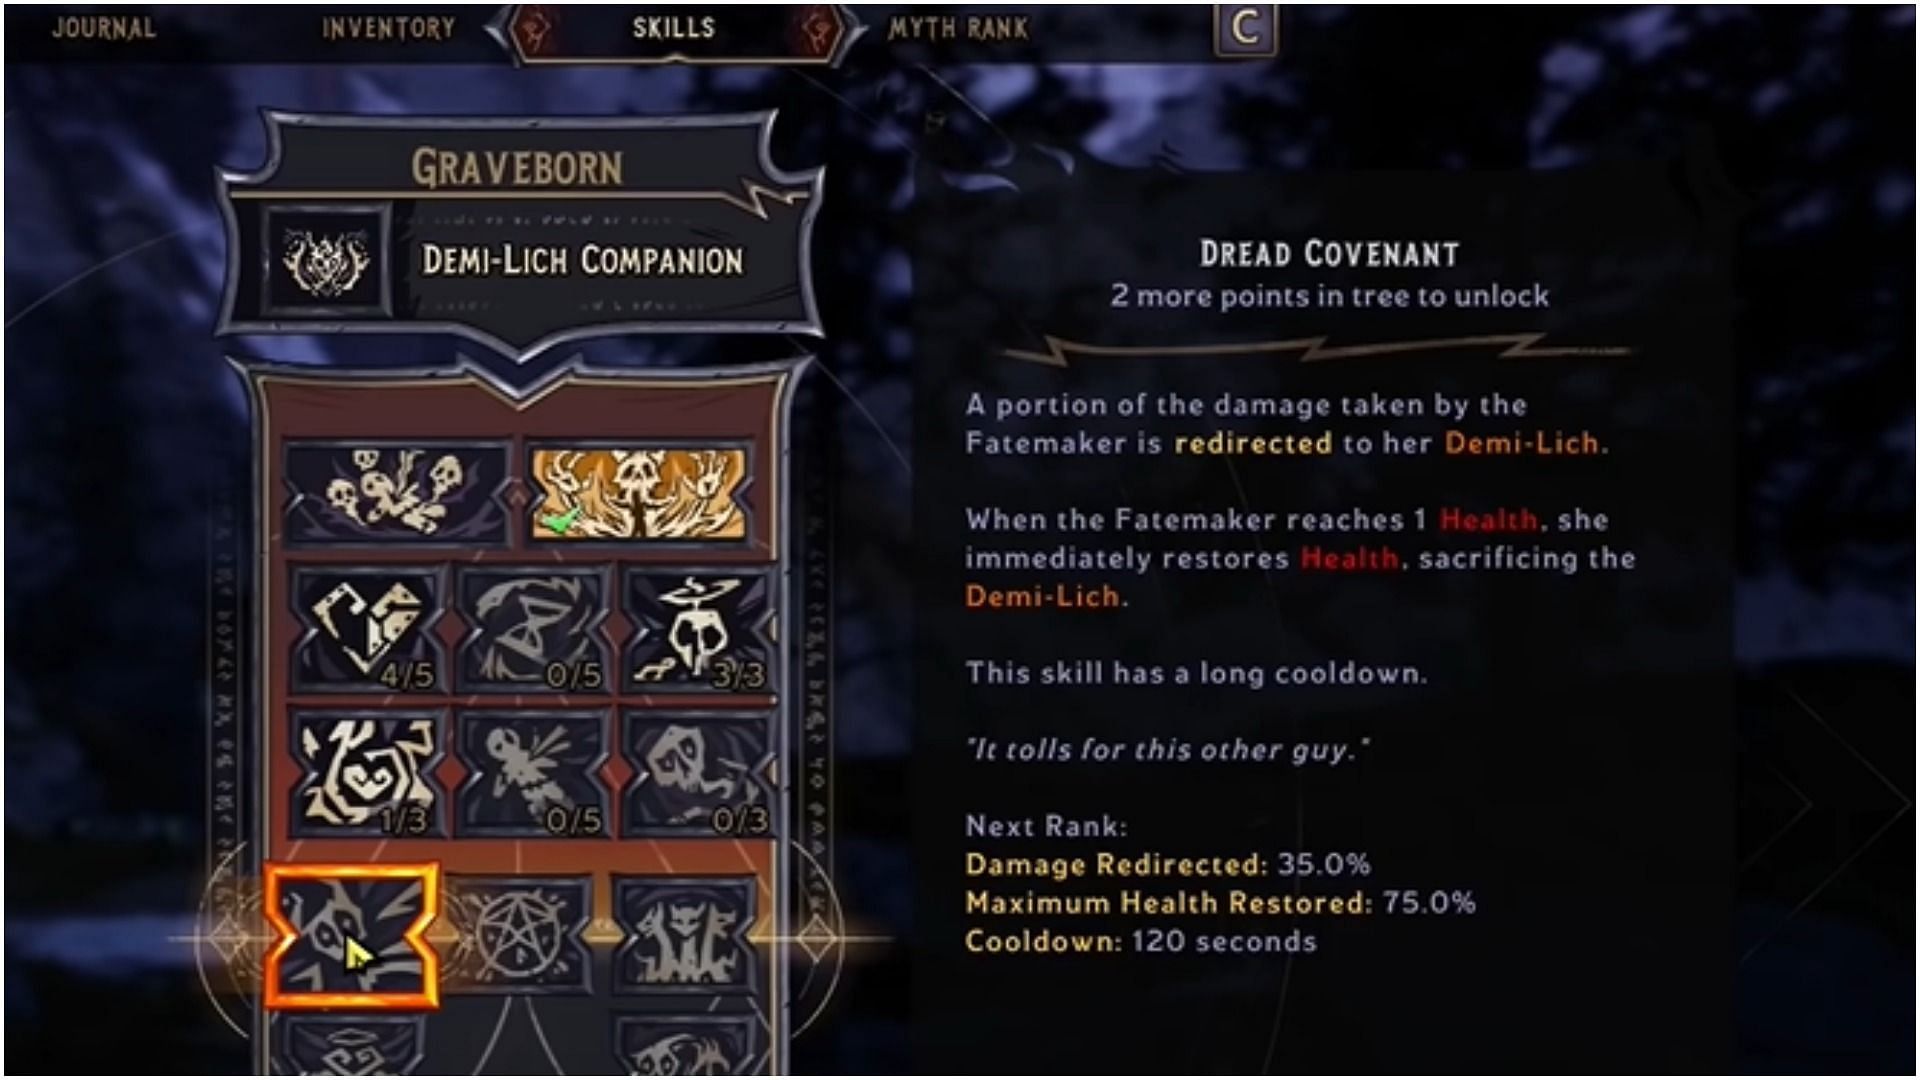 By sacrificing the Demi-Lich Companion, Dread Convenant heals the player (Image via Joltzdude139/YouTube)